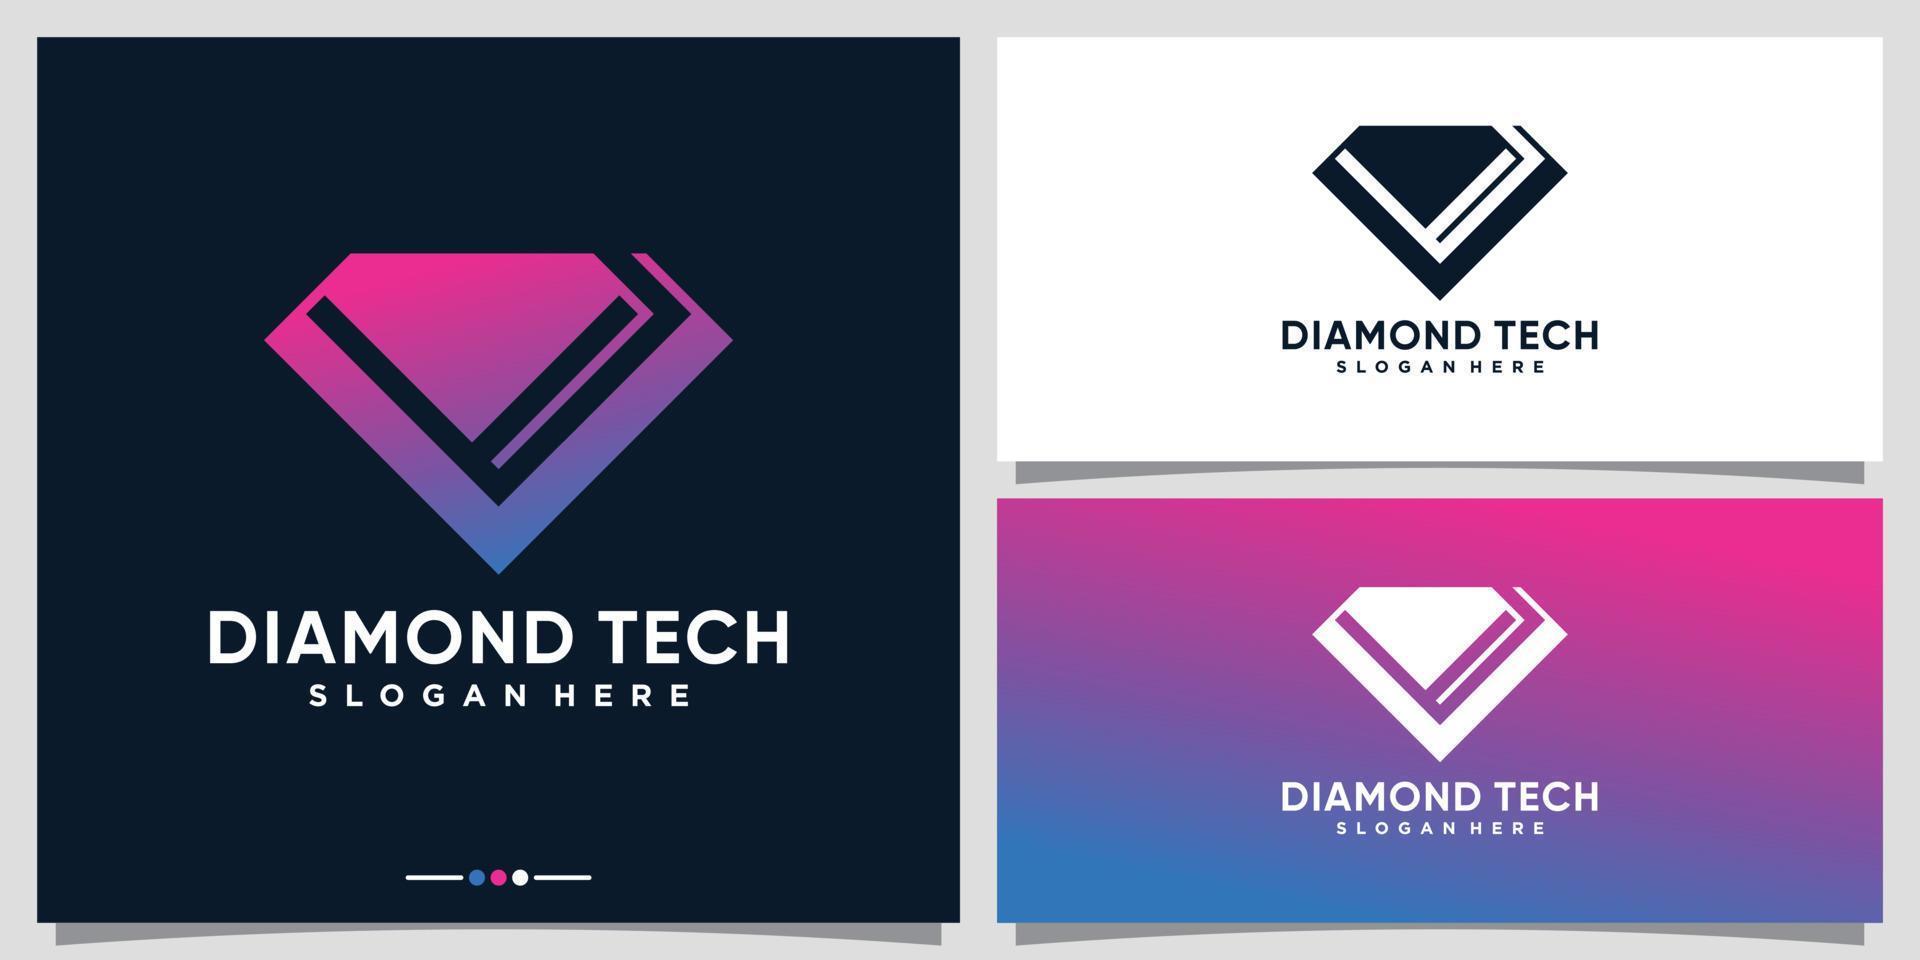 Diamond tech logo design template with unique concept Premium Vector